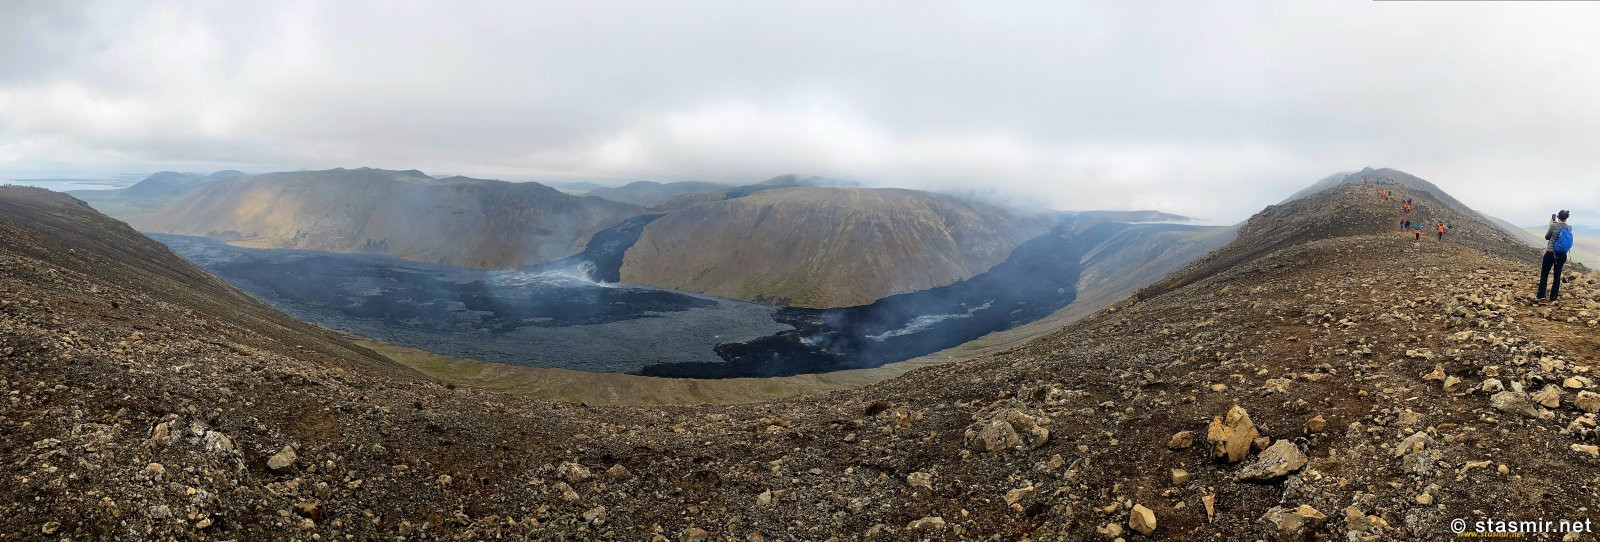 novyj vulkan v Islandii foto stasmir, a new volcano in Iceland, photo Stasmir